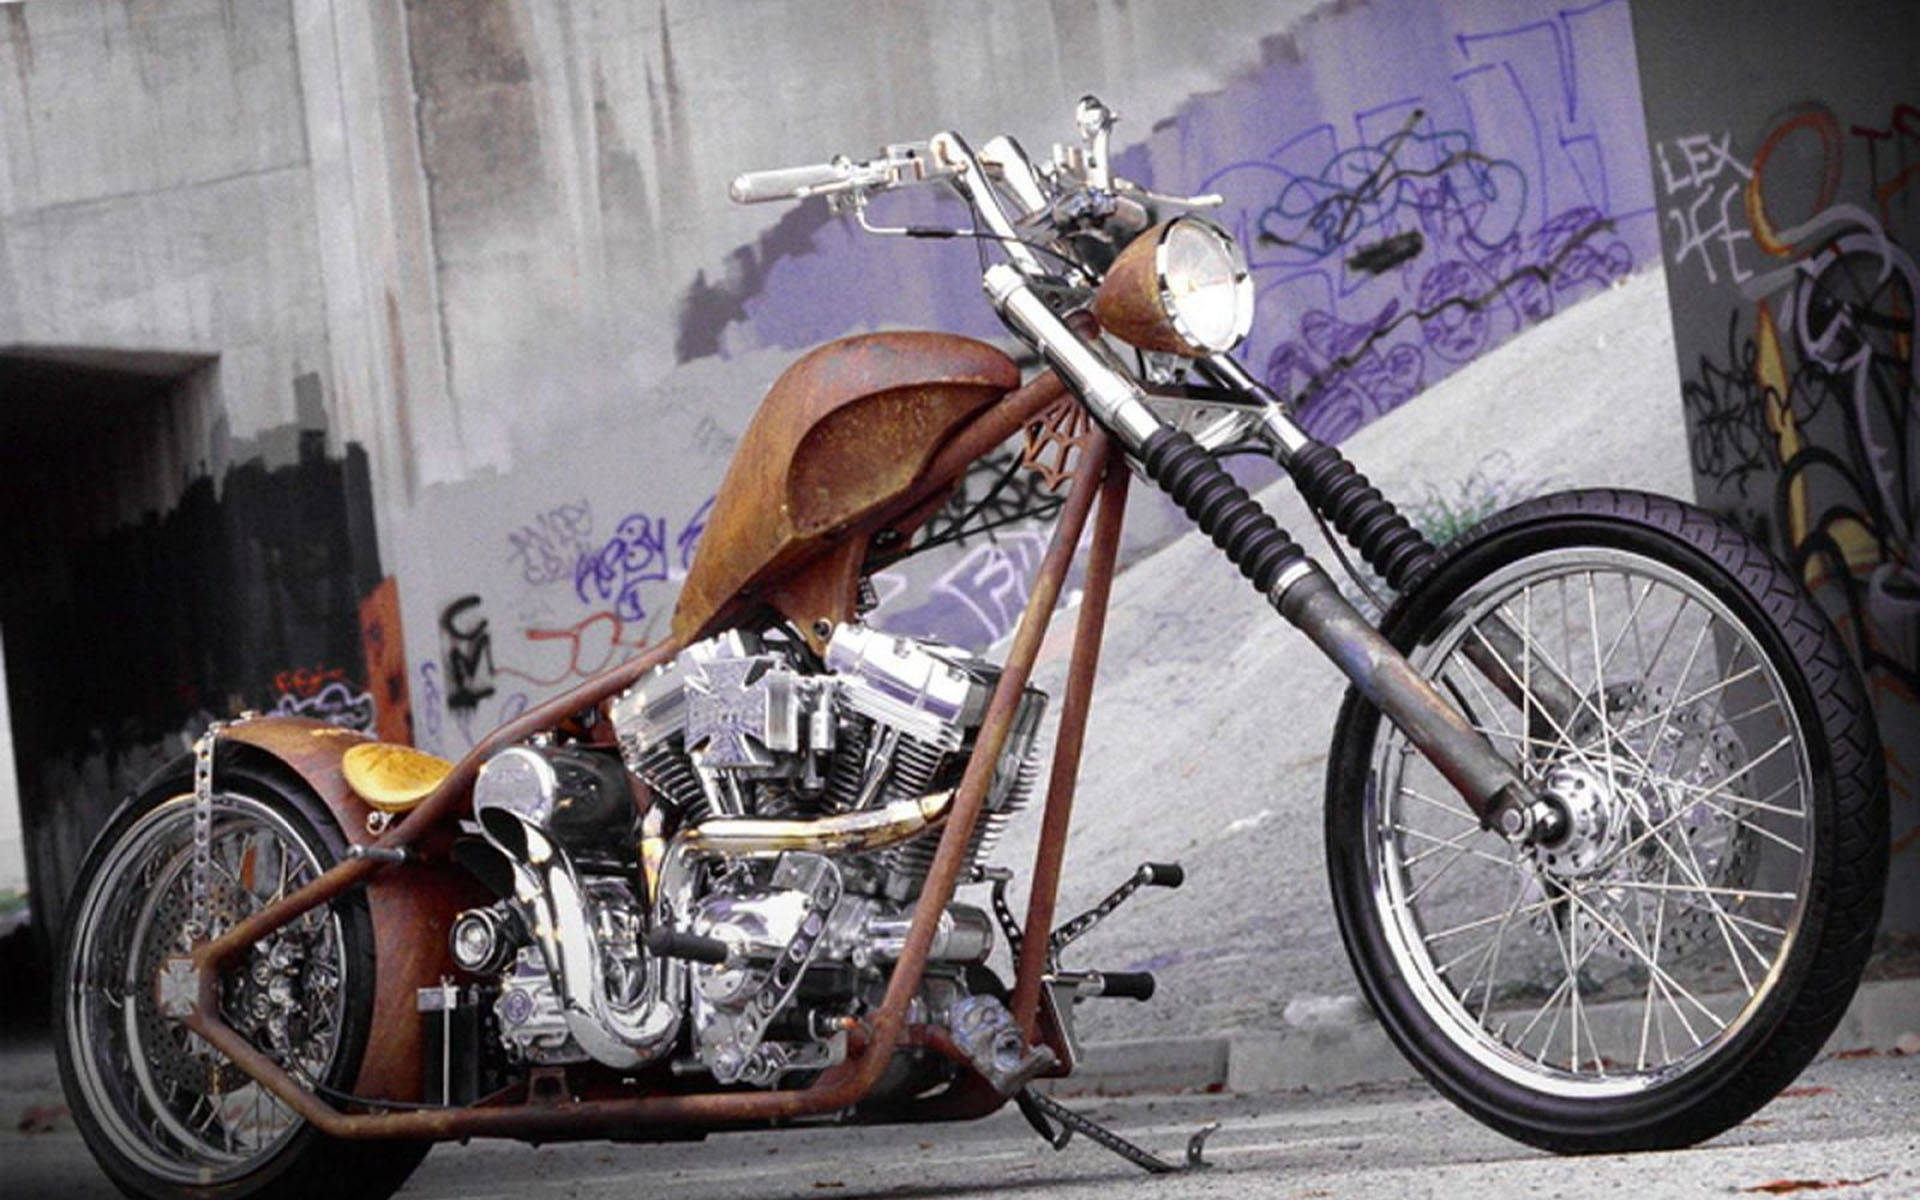 West Coast Choppers Rustic Motorcycle Wallpaper